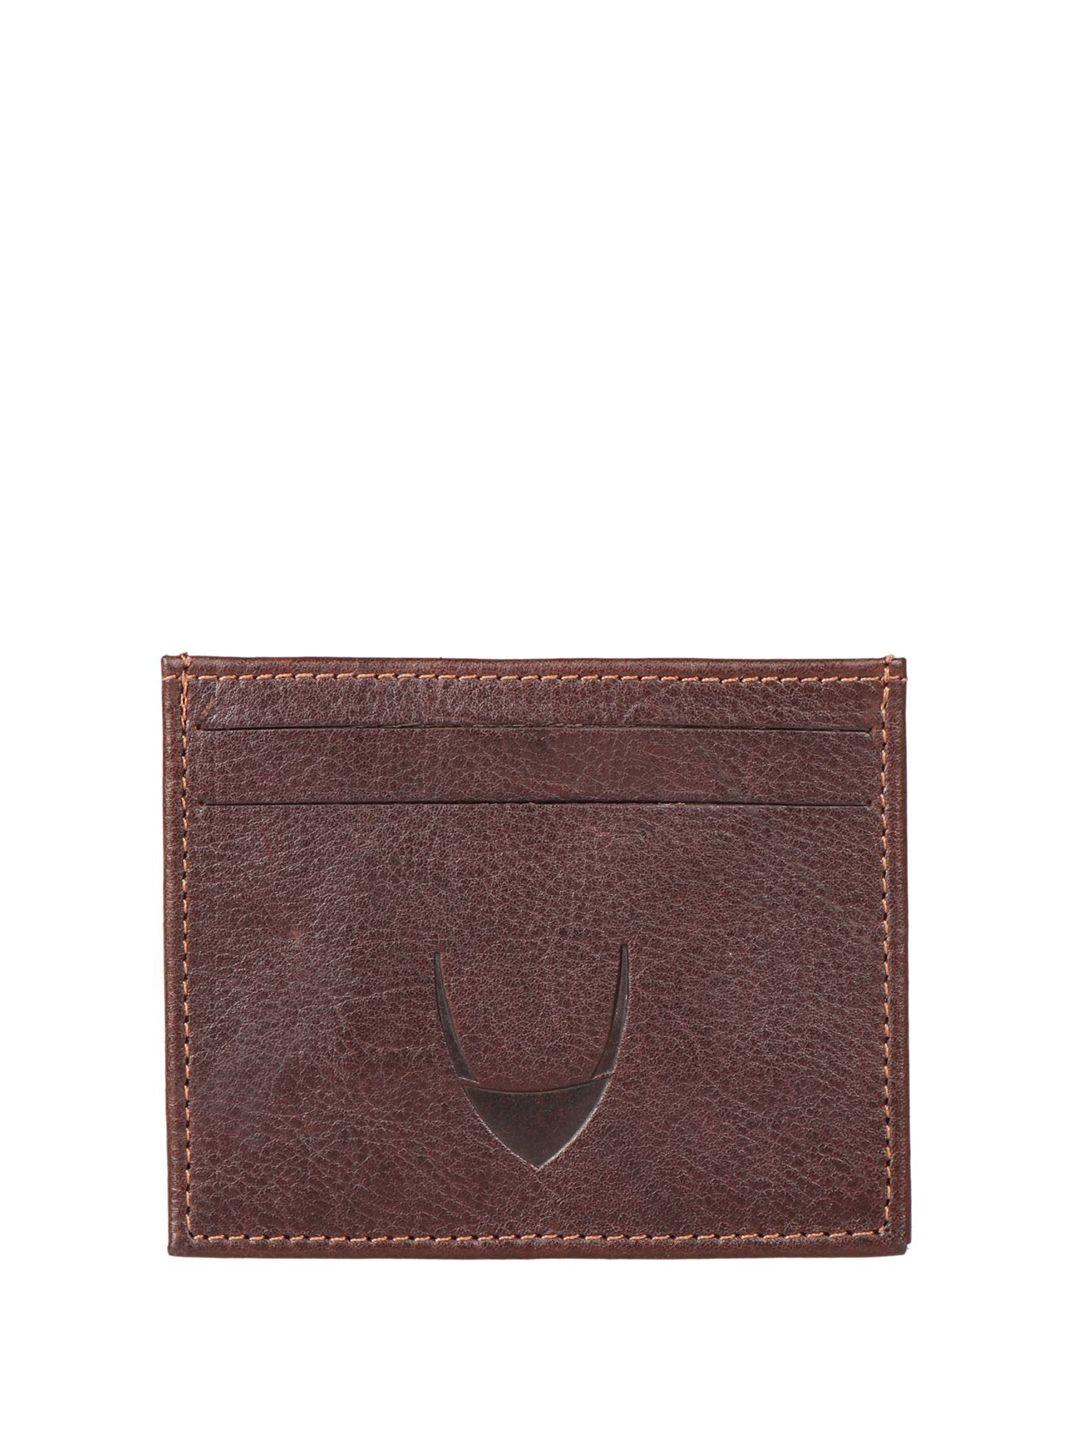 hidesign men leather three fold wallet